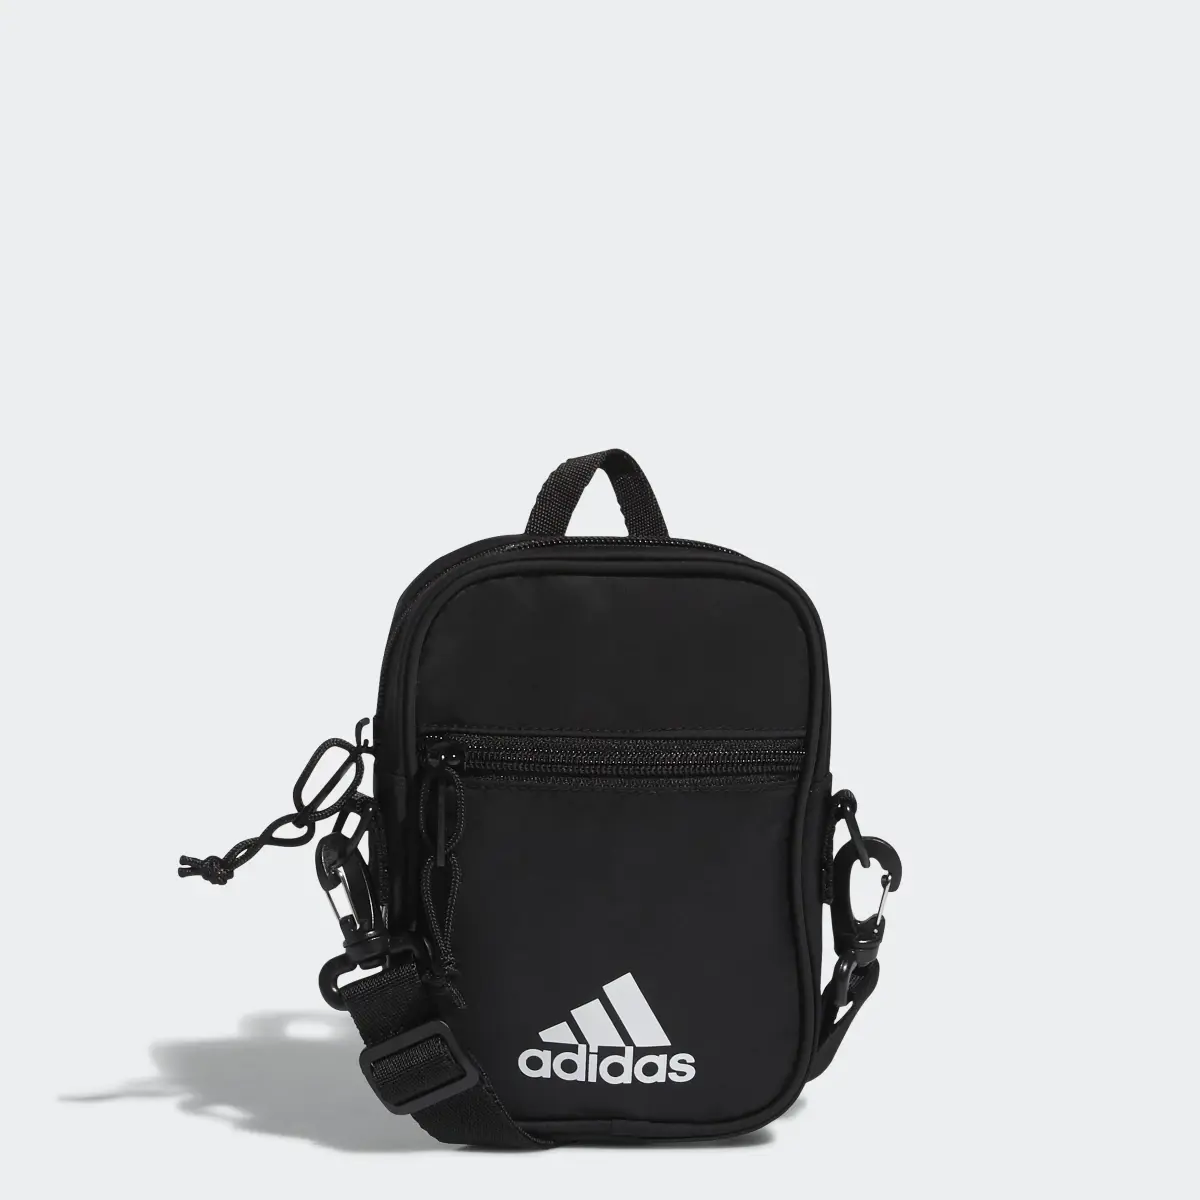 Adidas Must Have Festival Crossbody Bag. 1